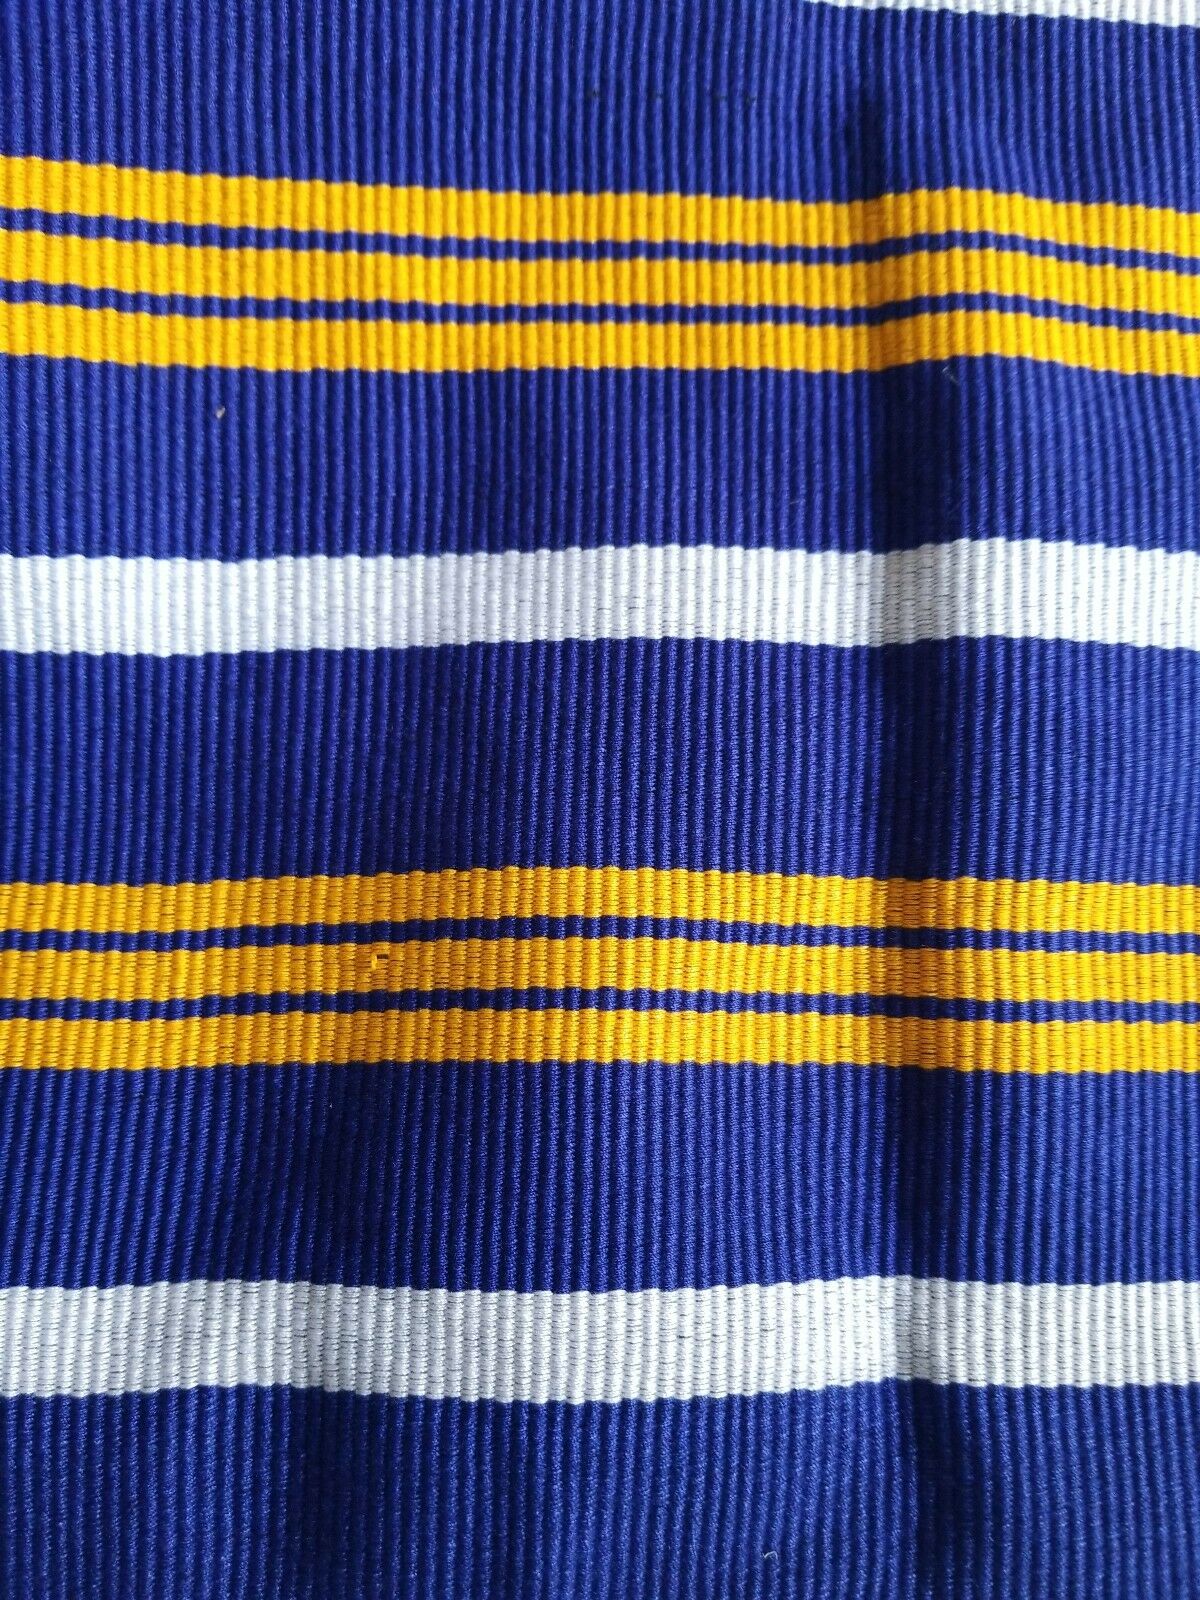 Faso Da Fani Fabric From Boukina Faso~Blue Yellow &white 38"(1yd&2")×17"